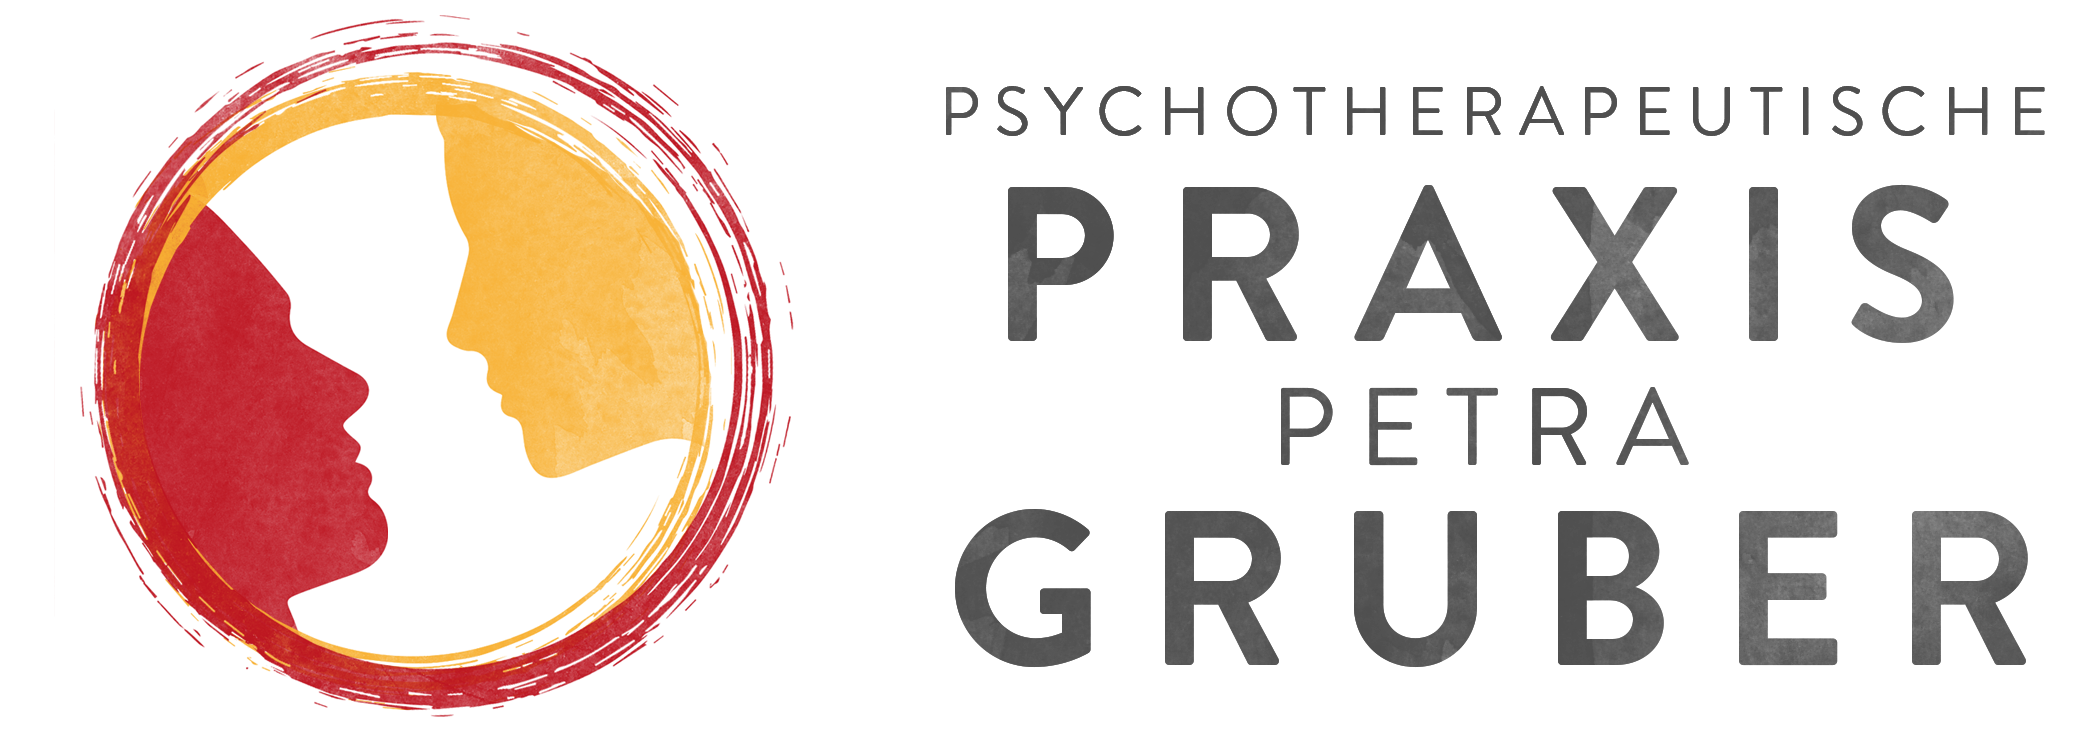 Psychotherapie Praxis Gruber